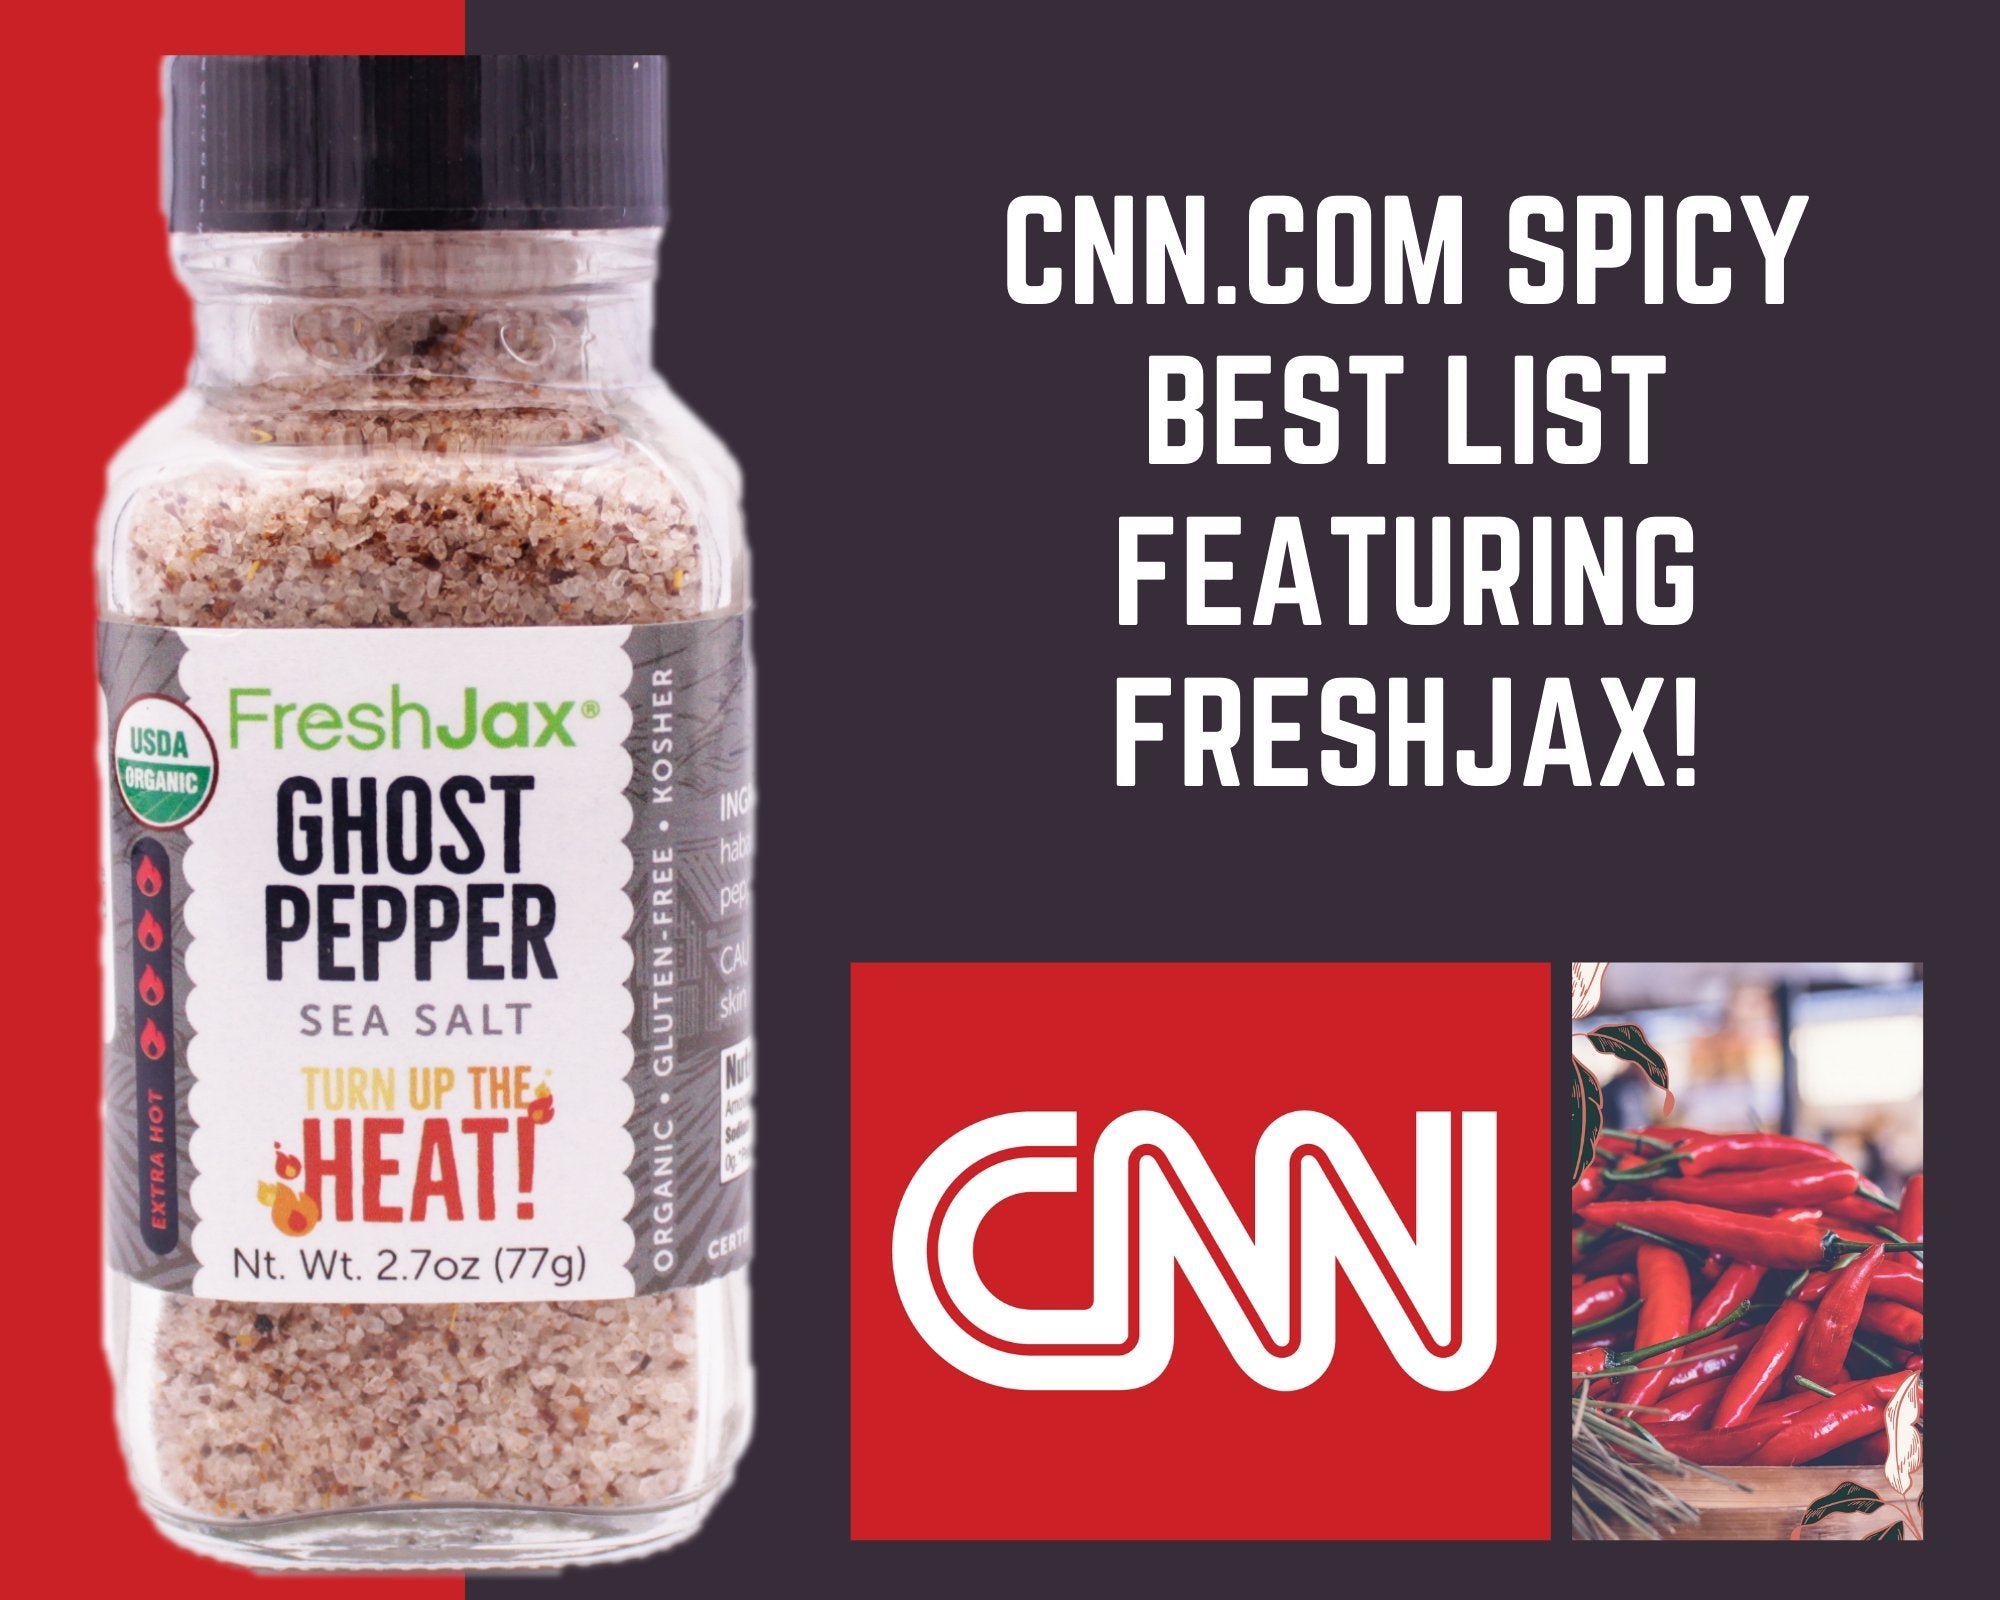 FreshJax Ghost Pepper Sea Salt seasoning featured on CNN